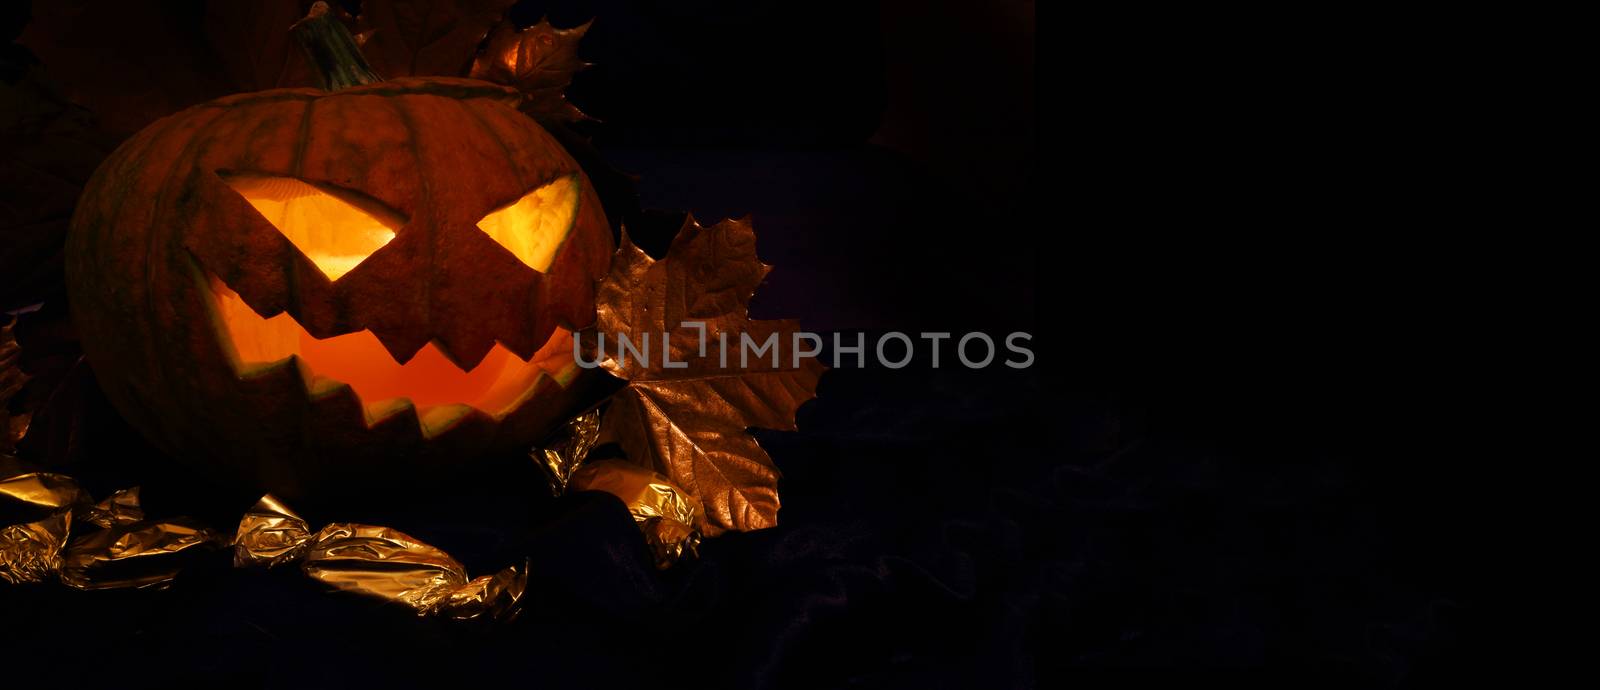 Halloween pumpkin with autumn leafs on black